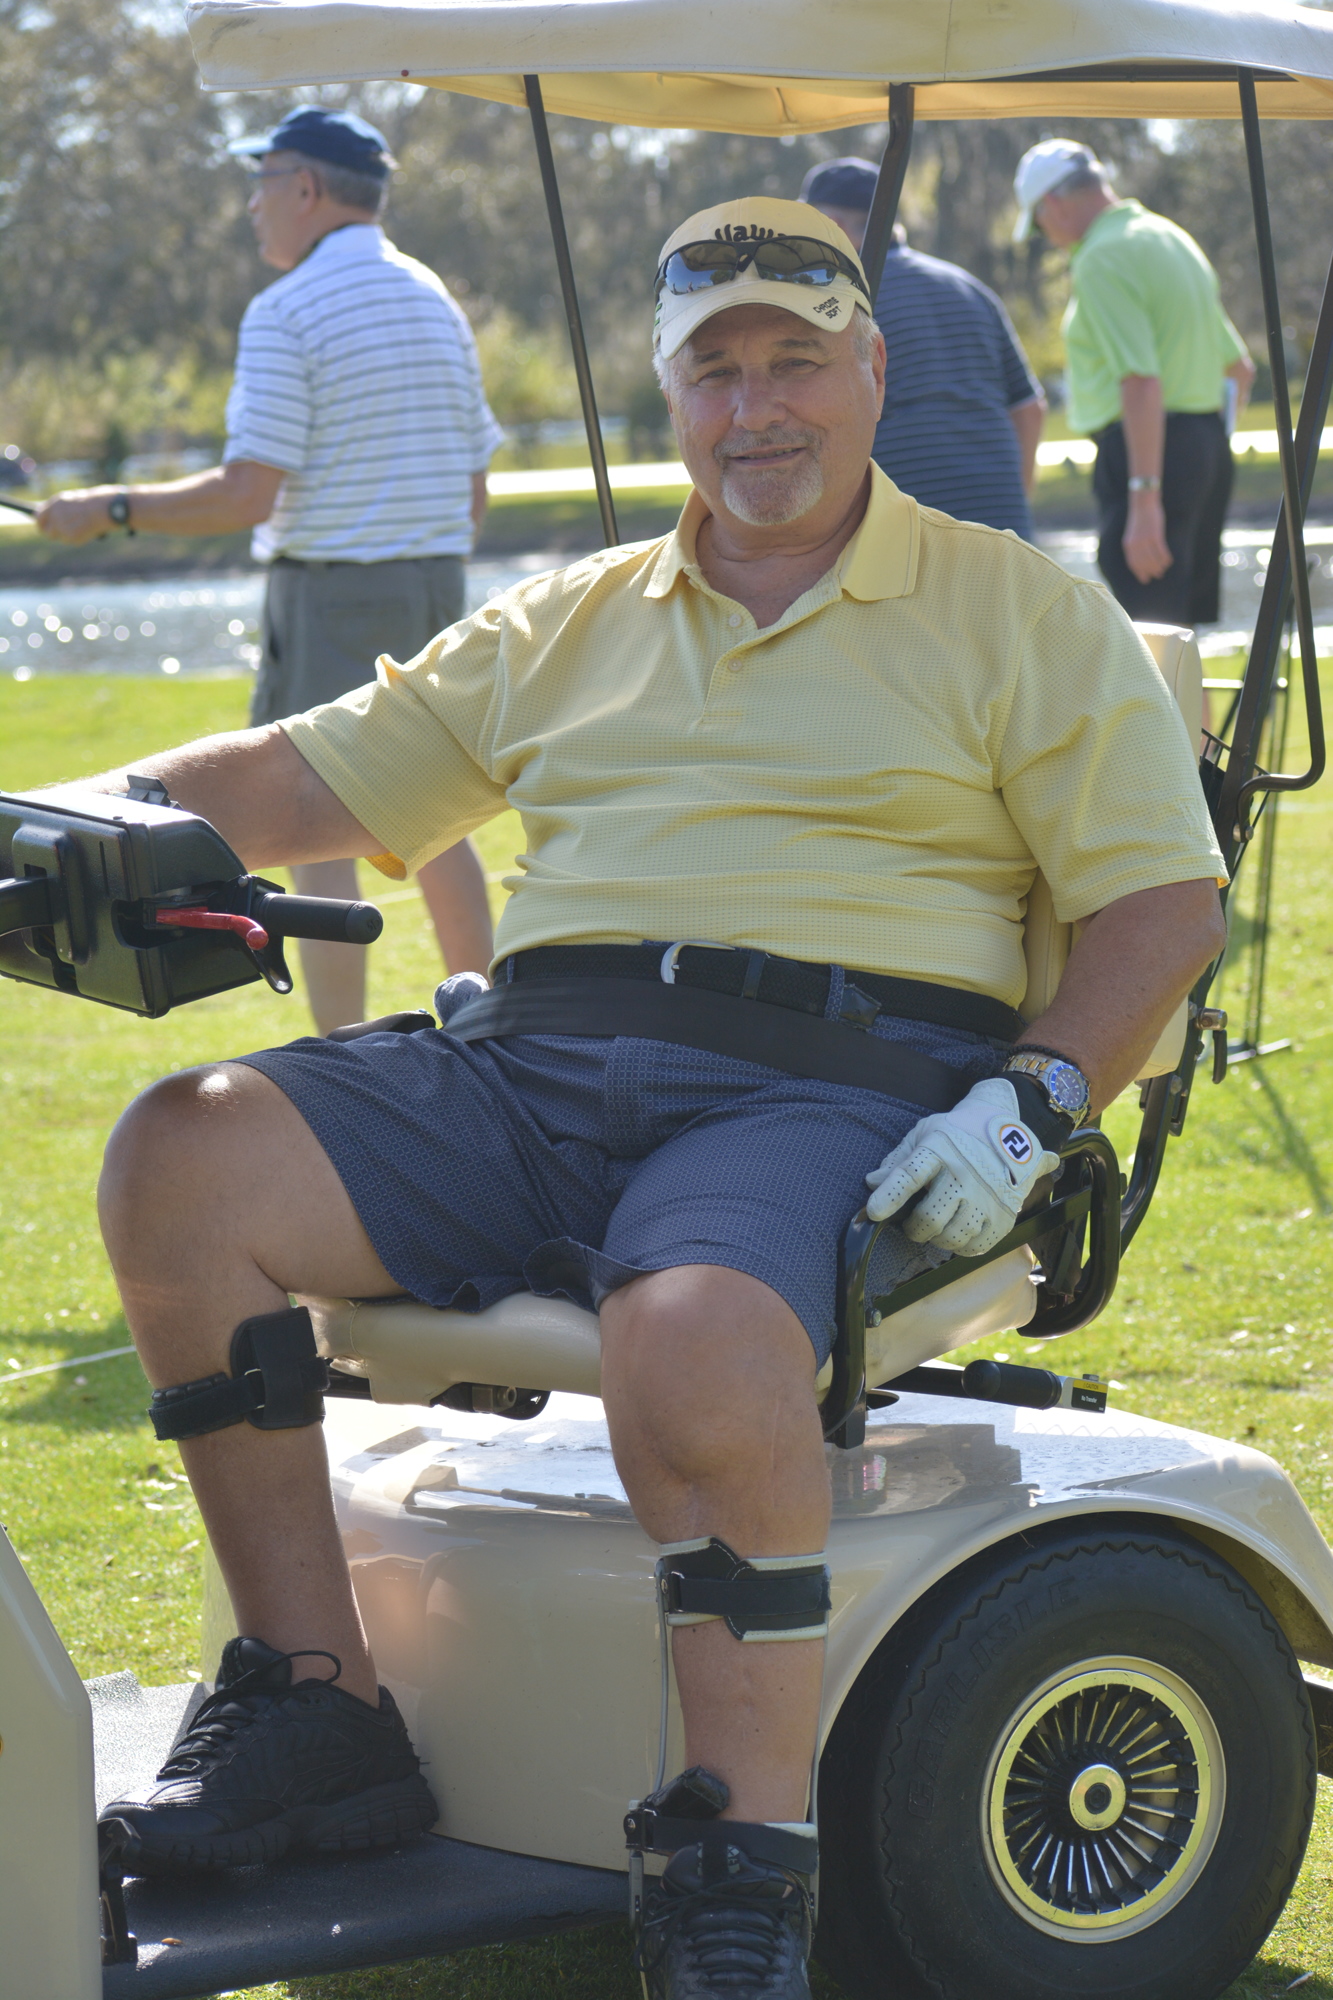 Walter Pawlowski said the program has helped his golf game stay sharp.